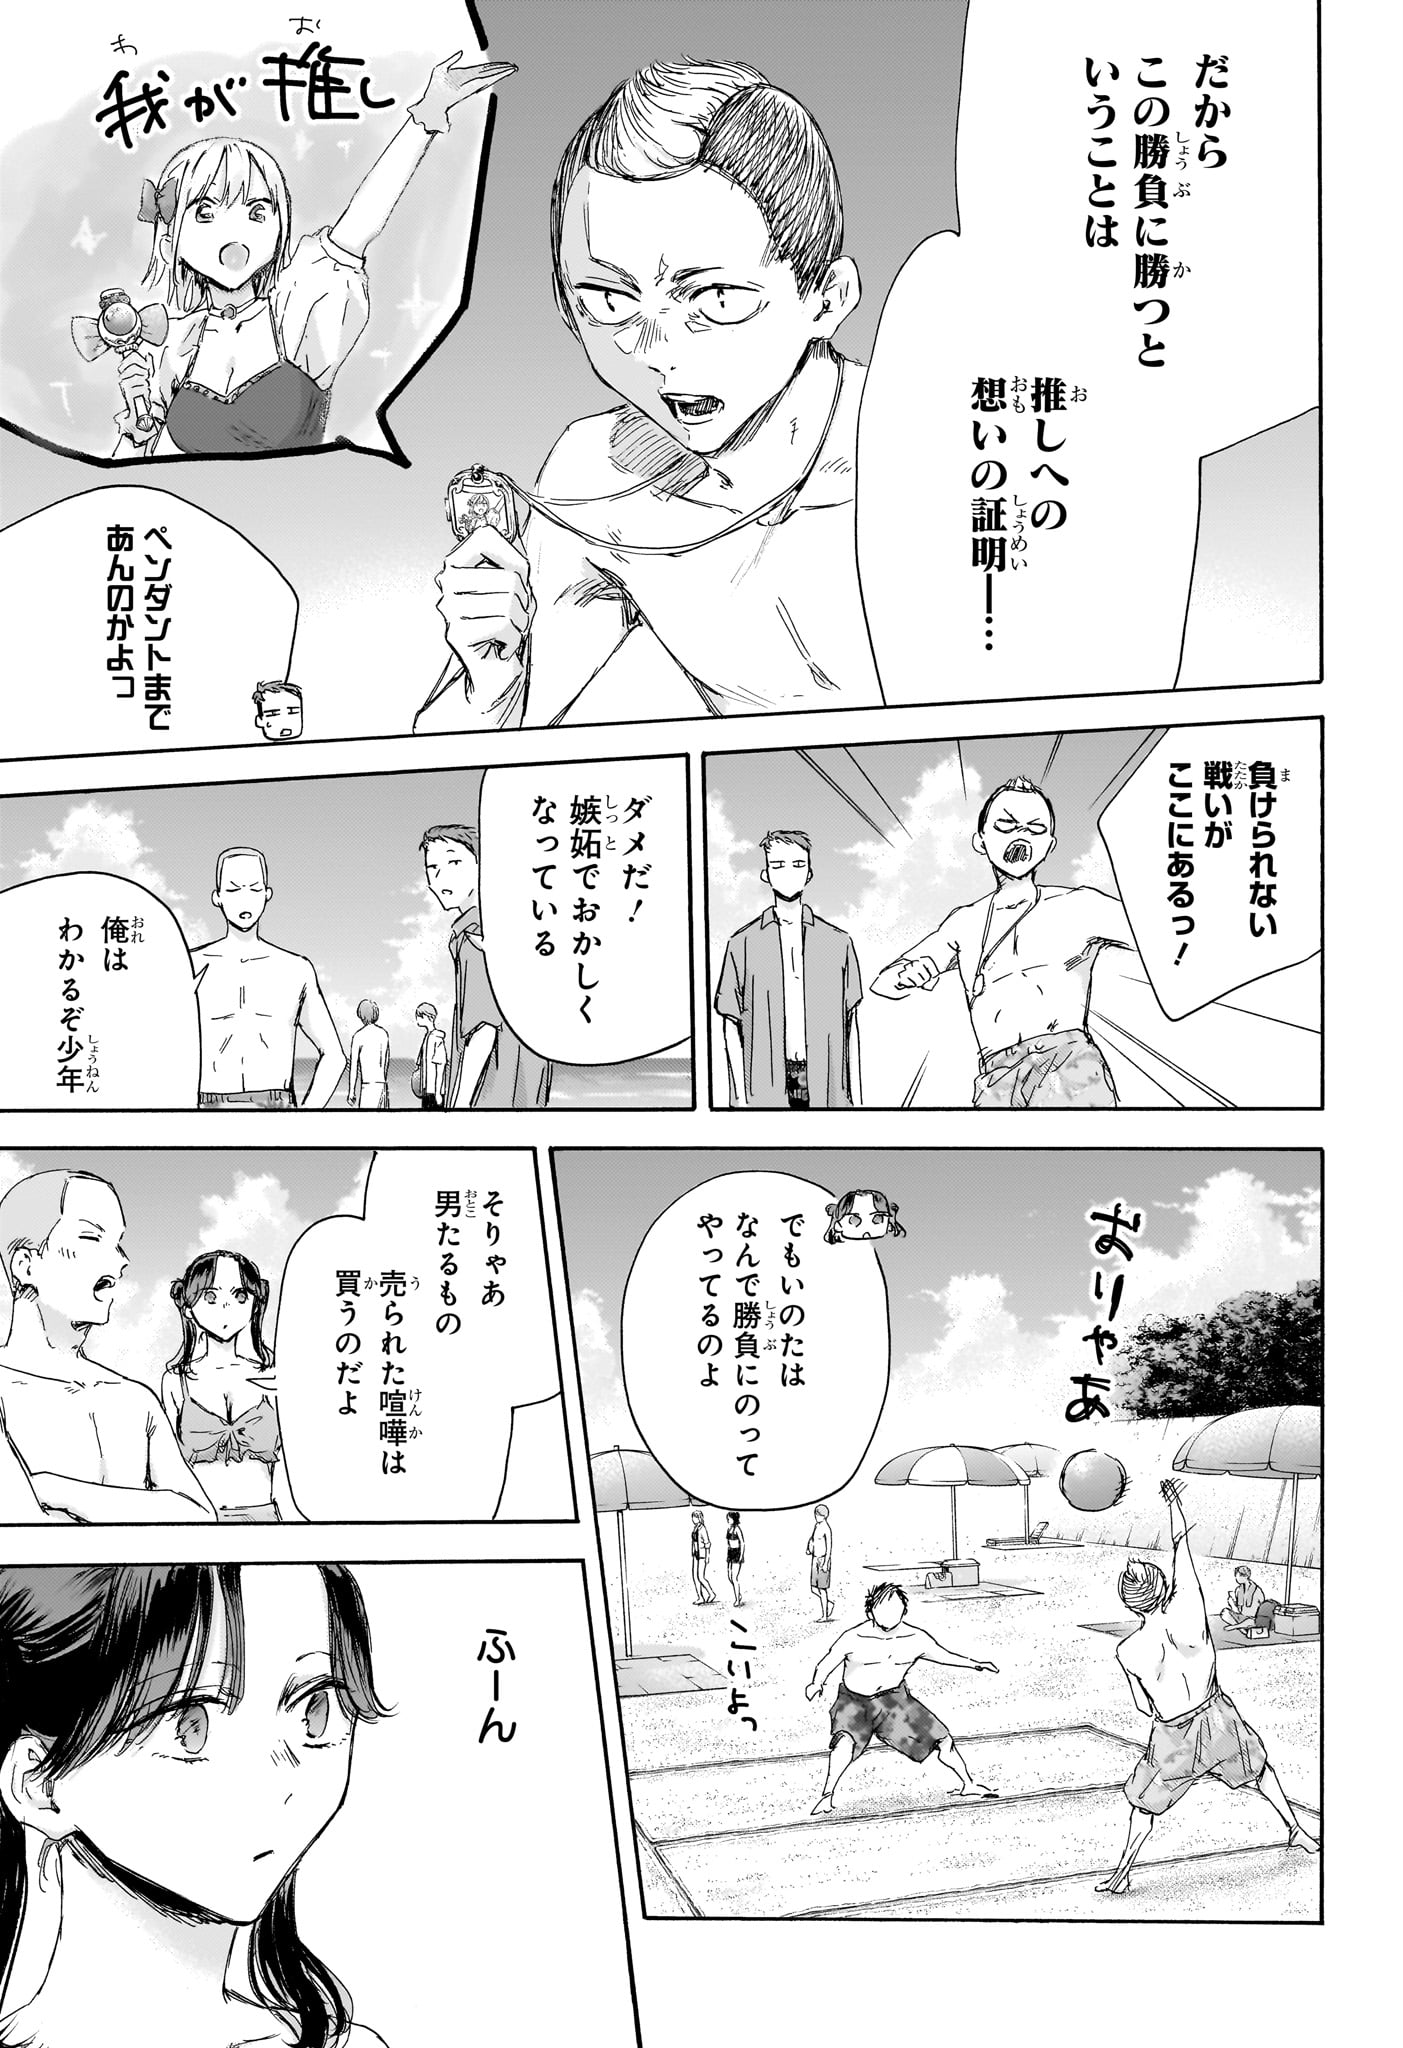 Ao no Hako - Chapter 158 - Page 7